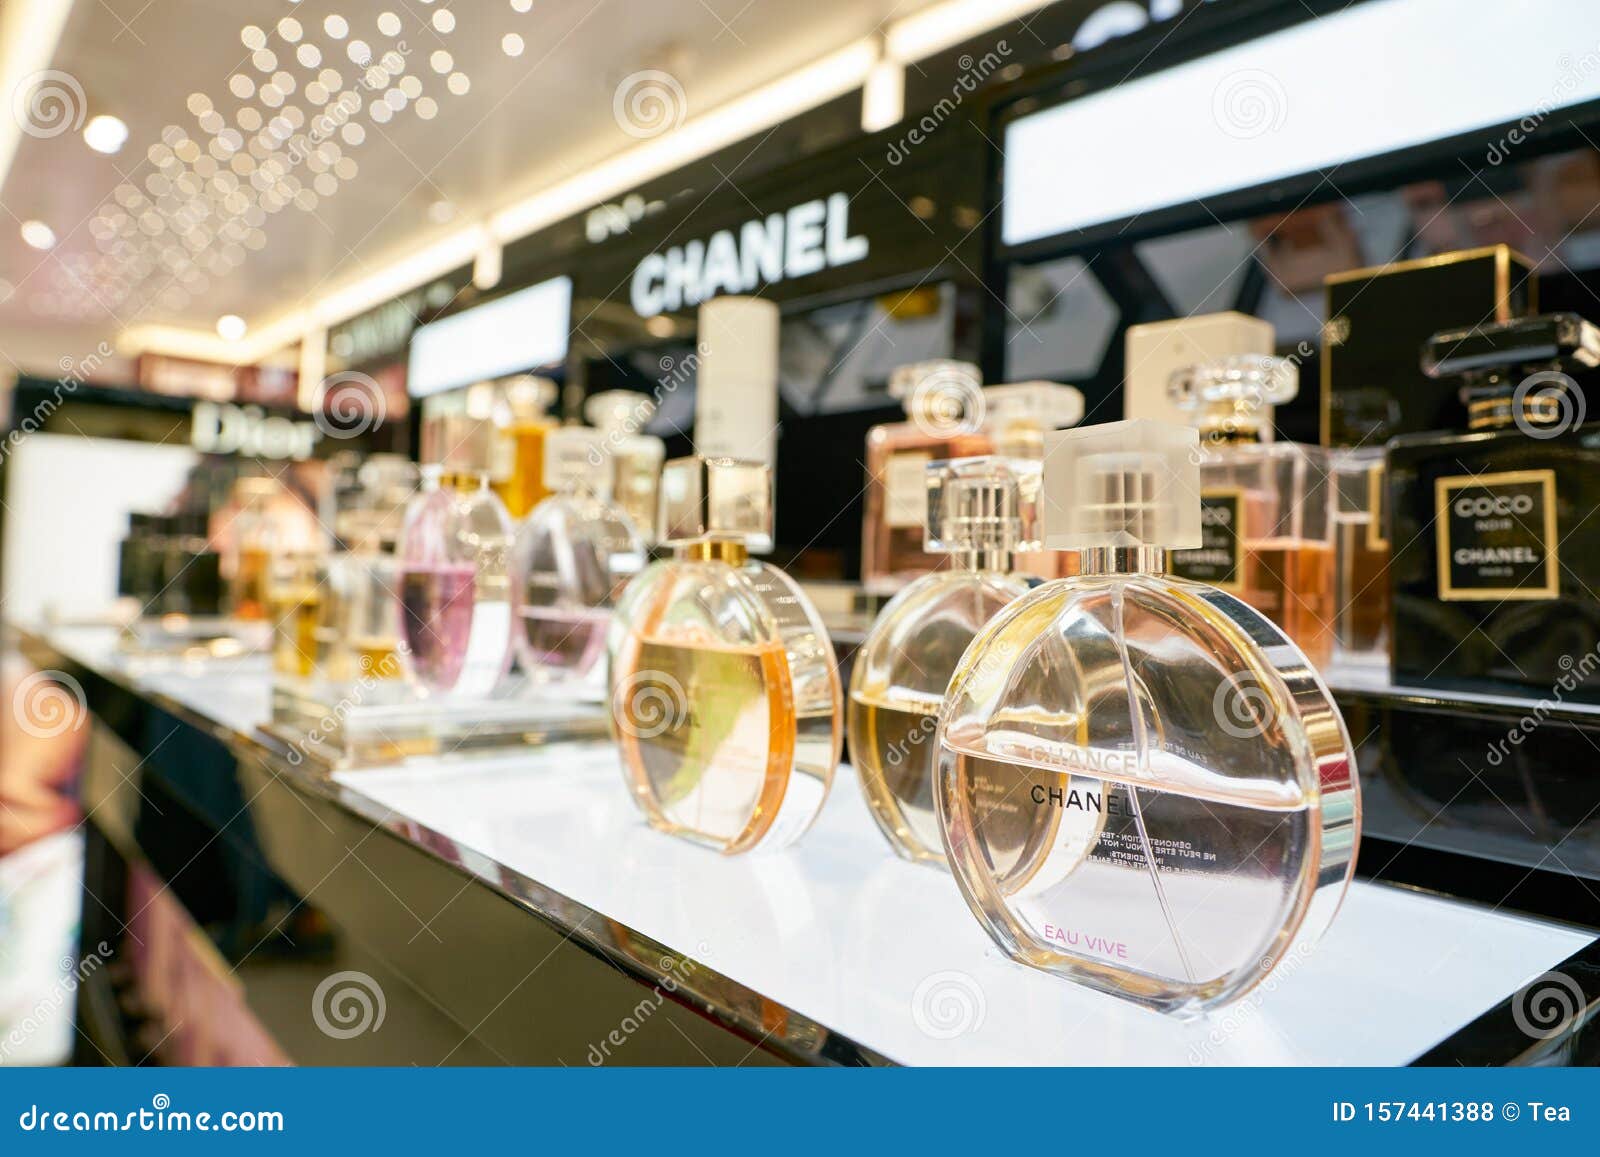 146 Chanel Shop Hong Kong Stock Photos - Free & Royalty-Free Stock Photos  from Dreamstime